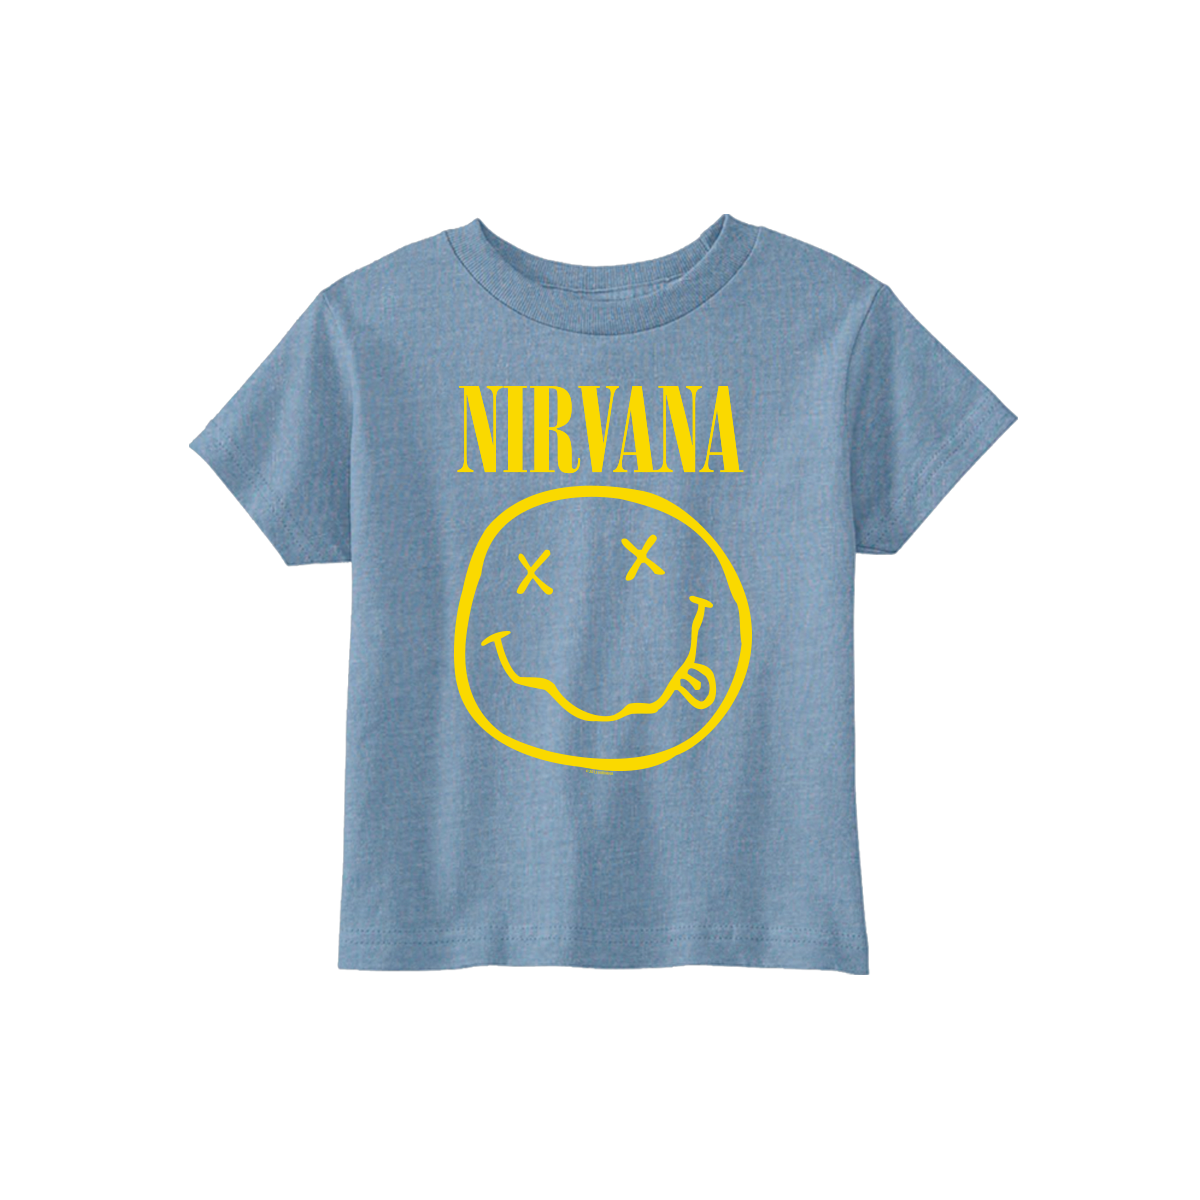 NIRBLUETODDLERTEE - Nirvana Store